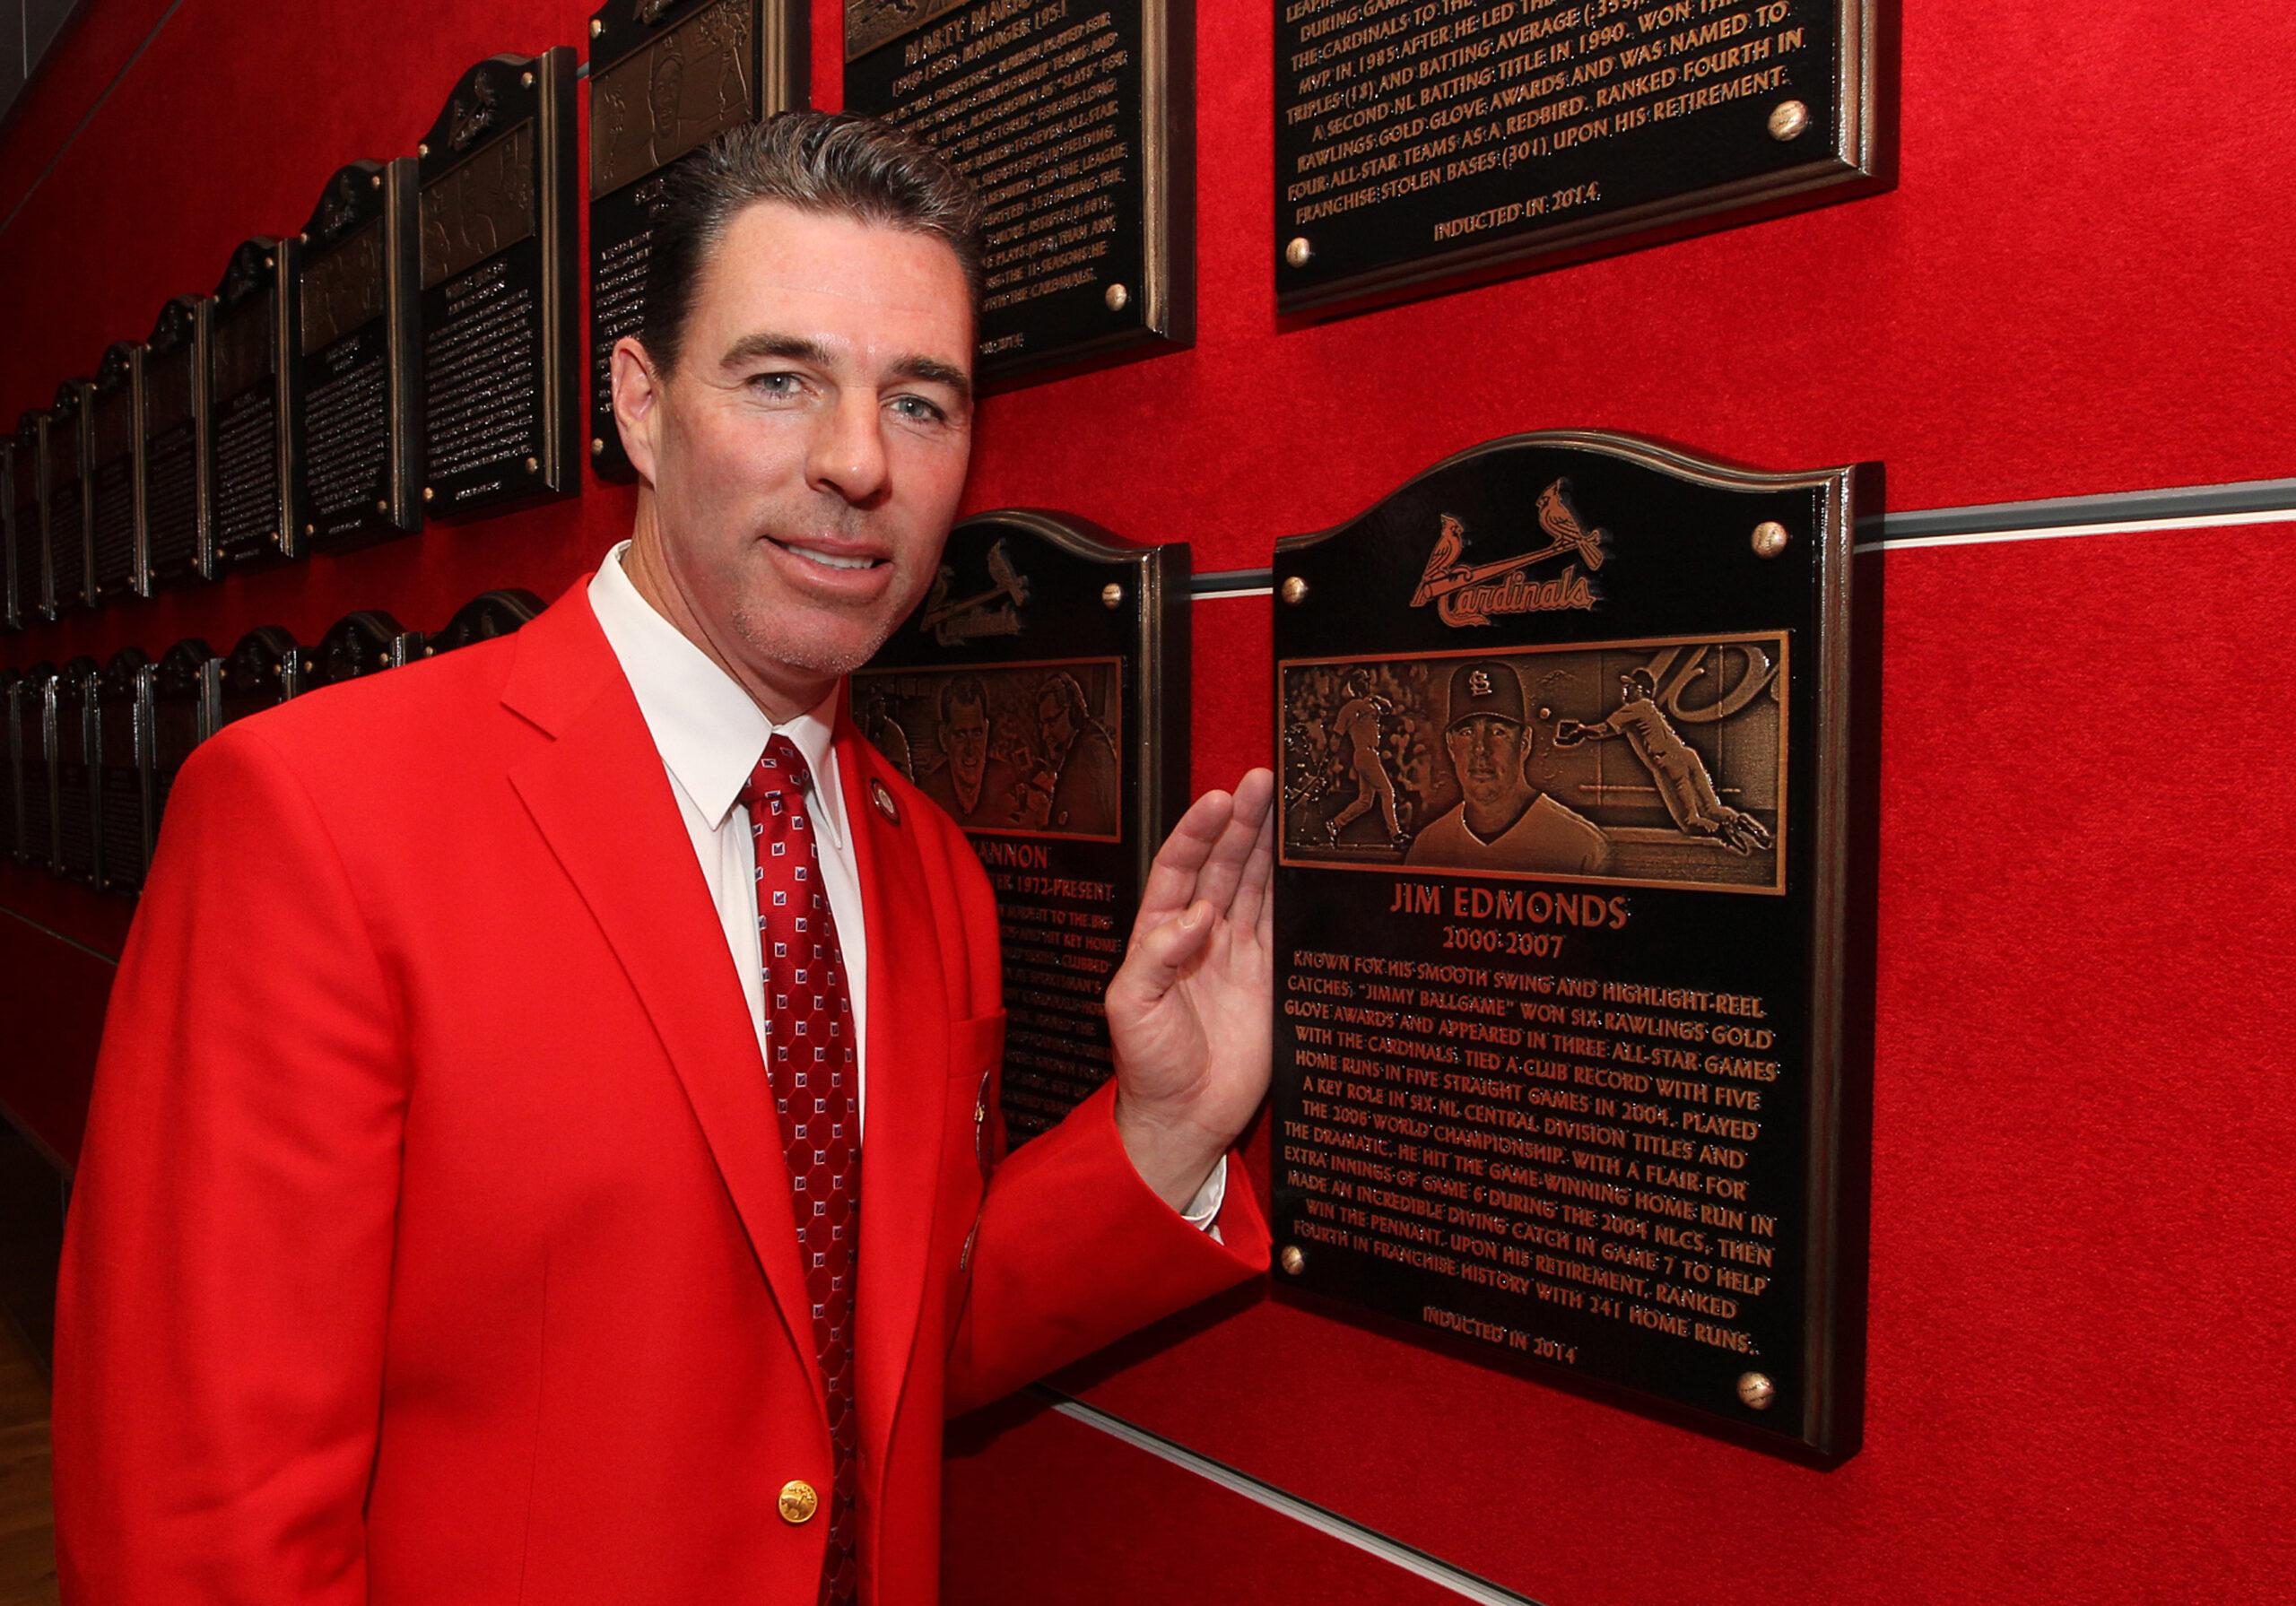 Jim Edmonds at the St. Louis Cardinals Hall of Fame Induction ceremonies